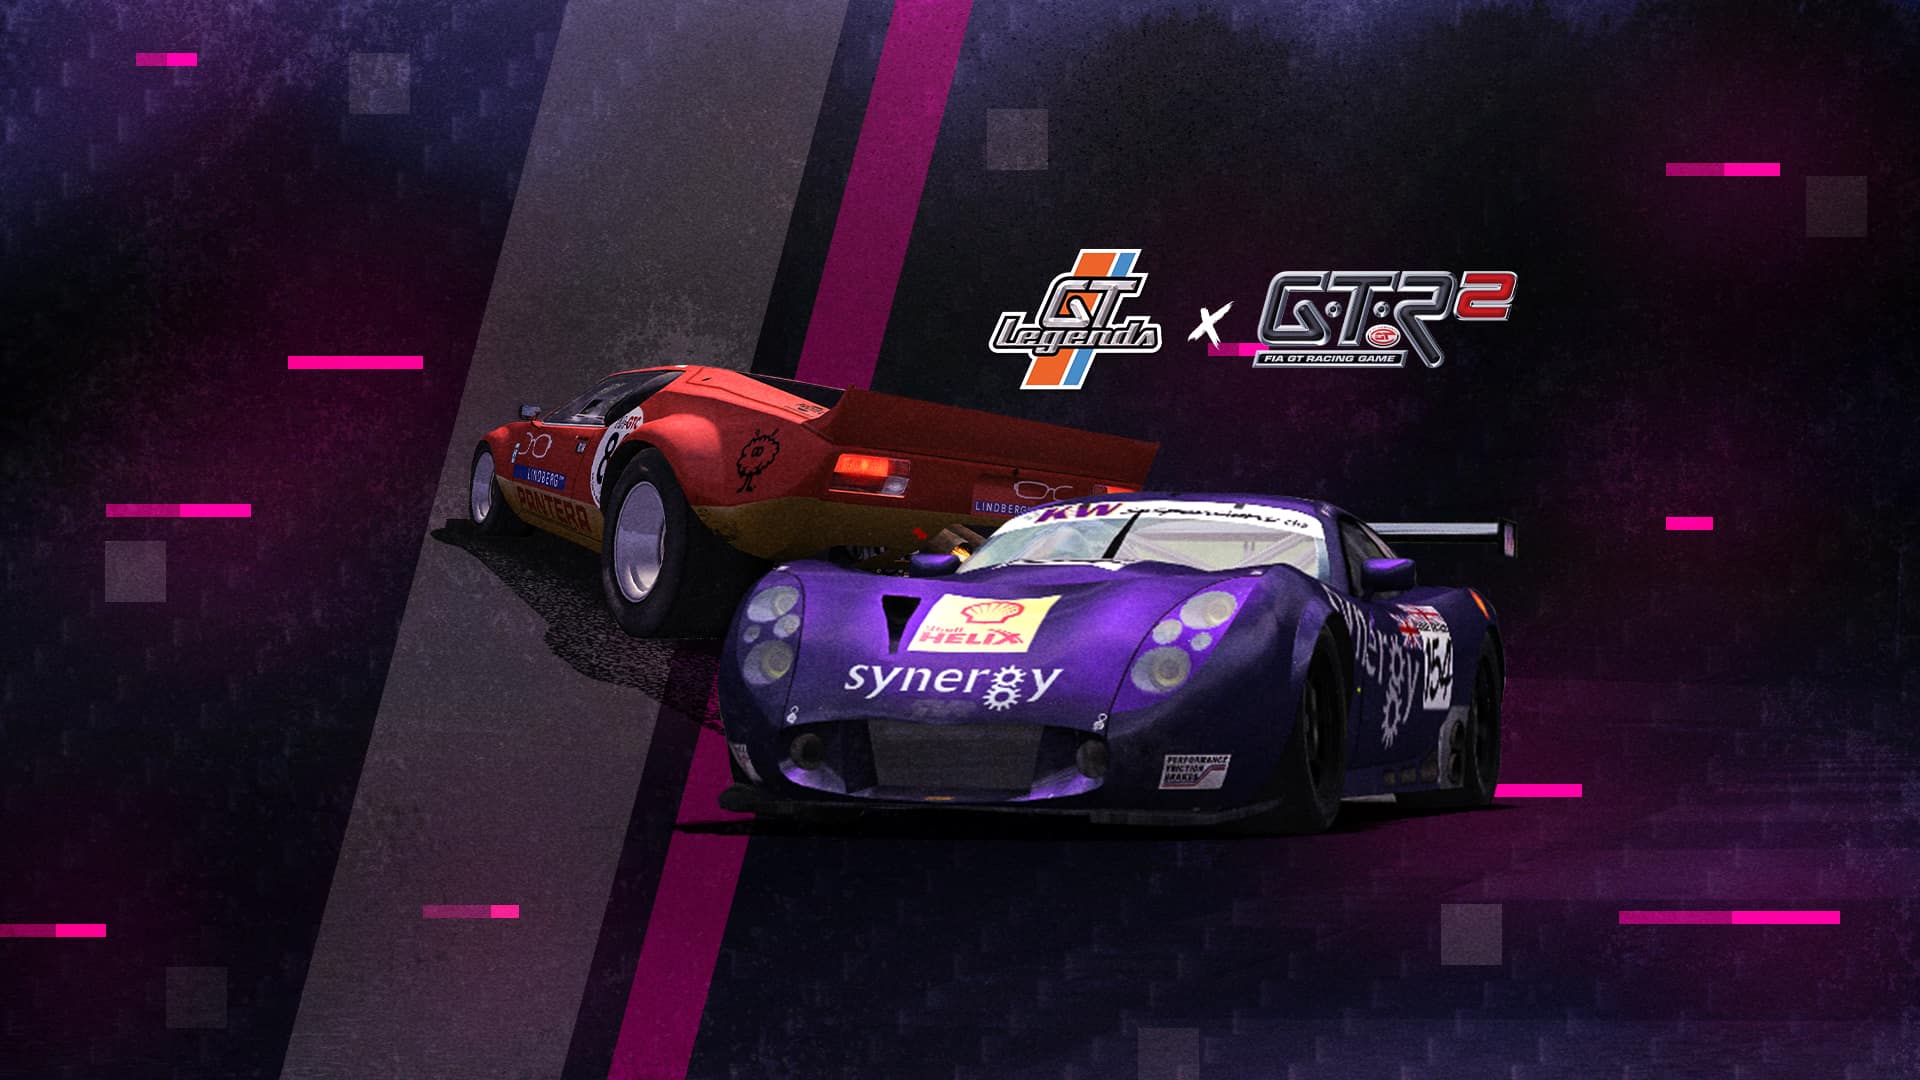 BURNOUT Racing Game Series Retrospective - A Look Back 